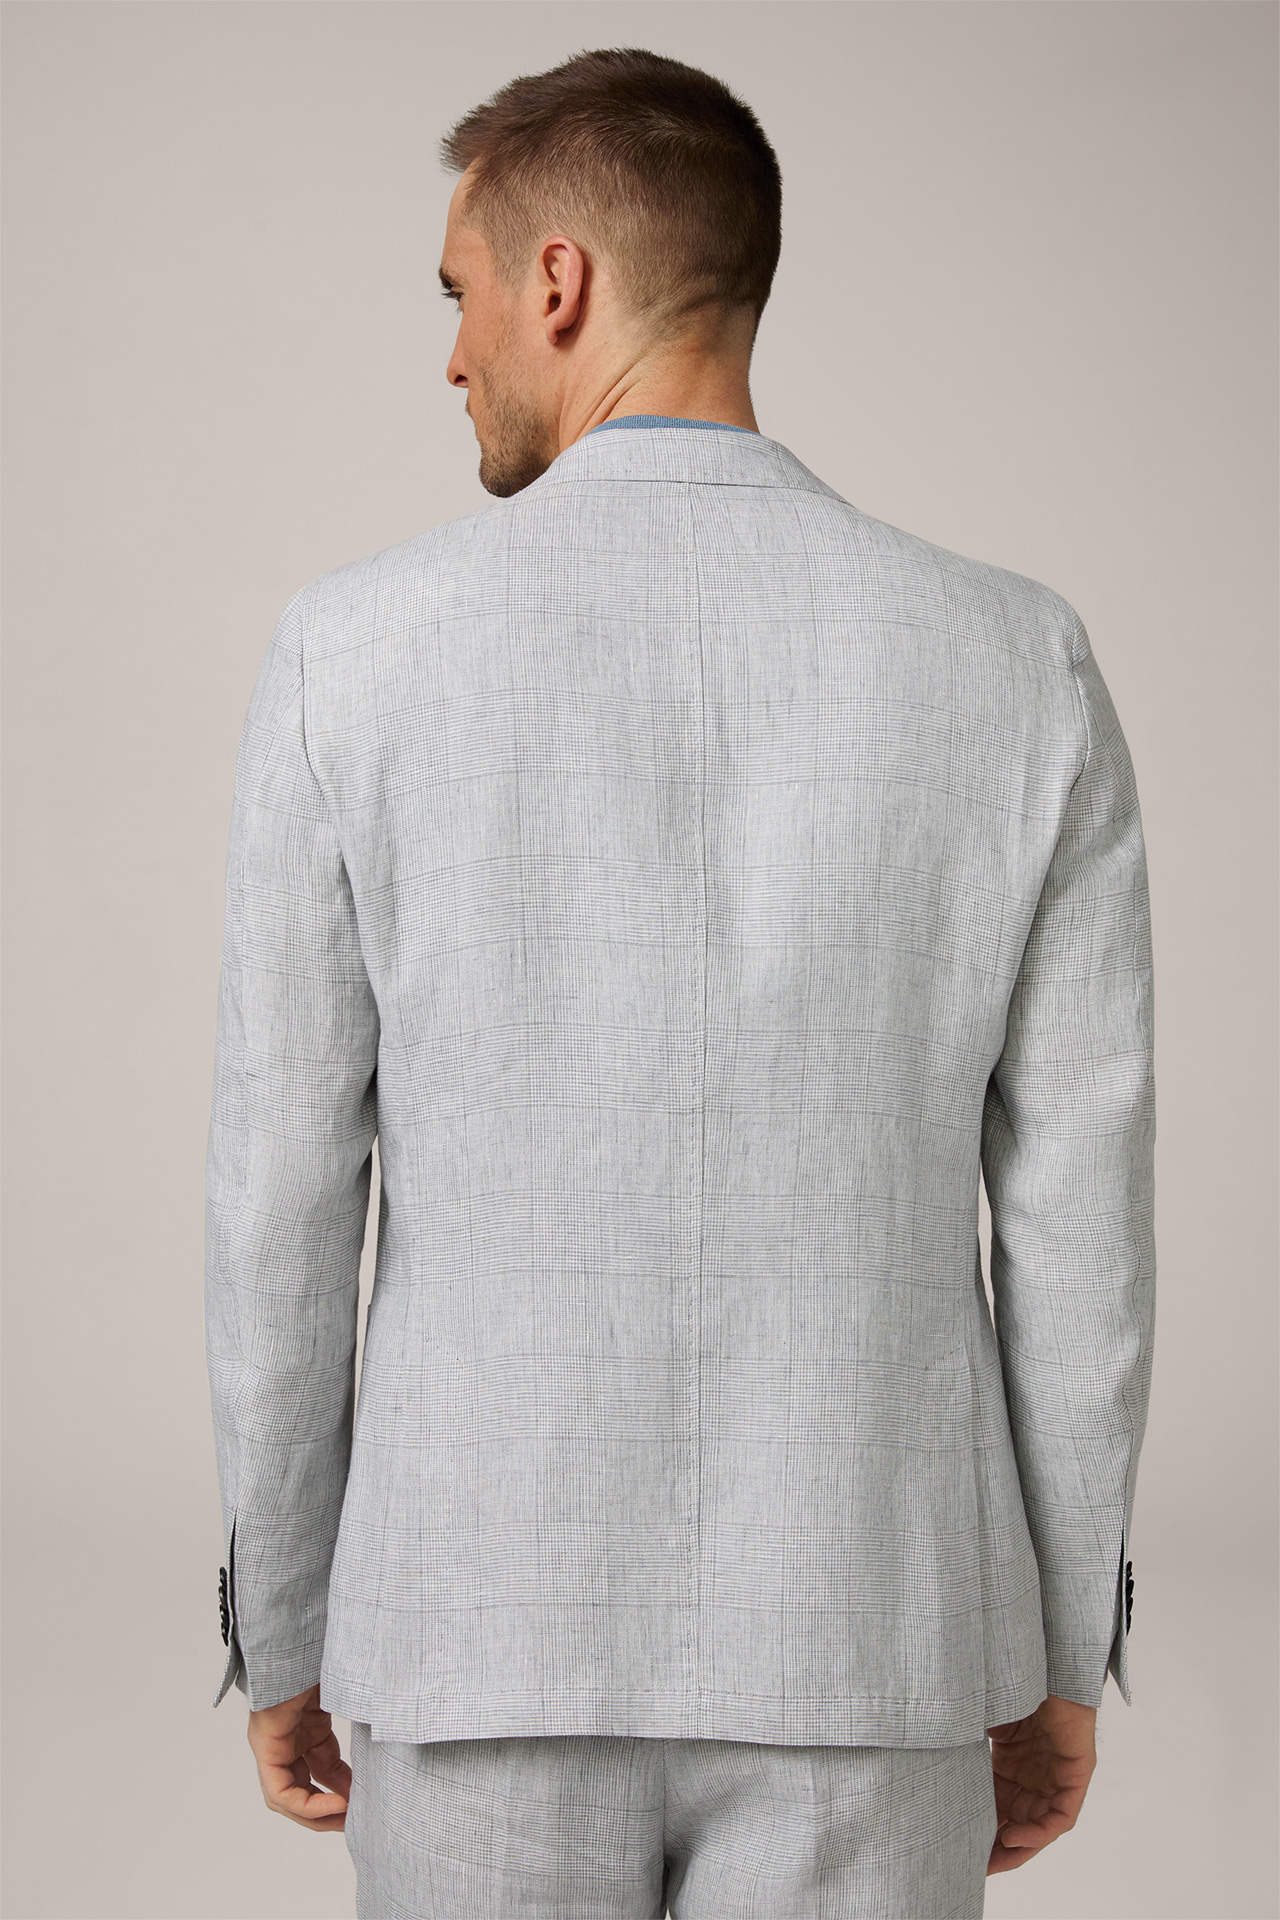 Giro Linen Modular Jacket in Grey Patterned